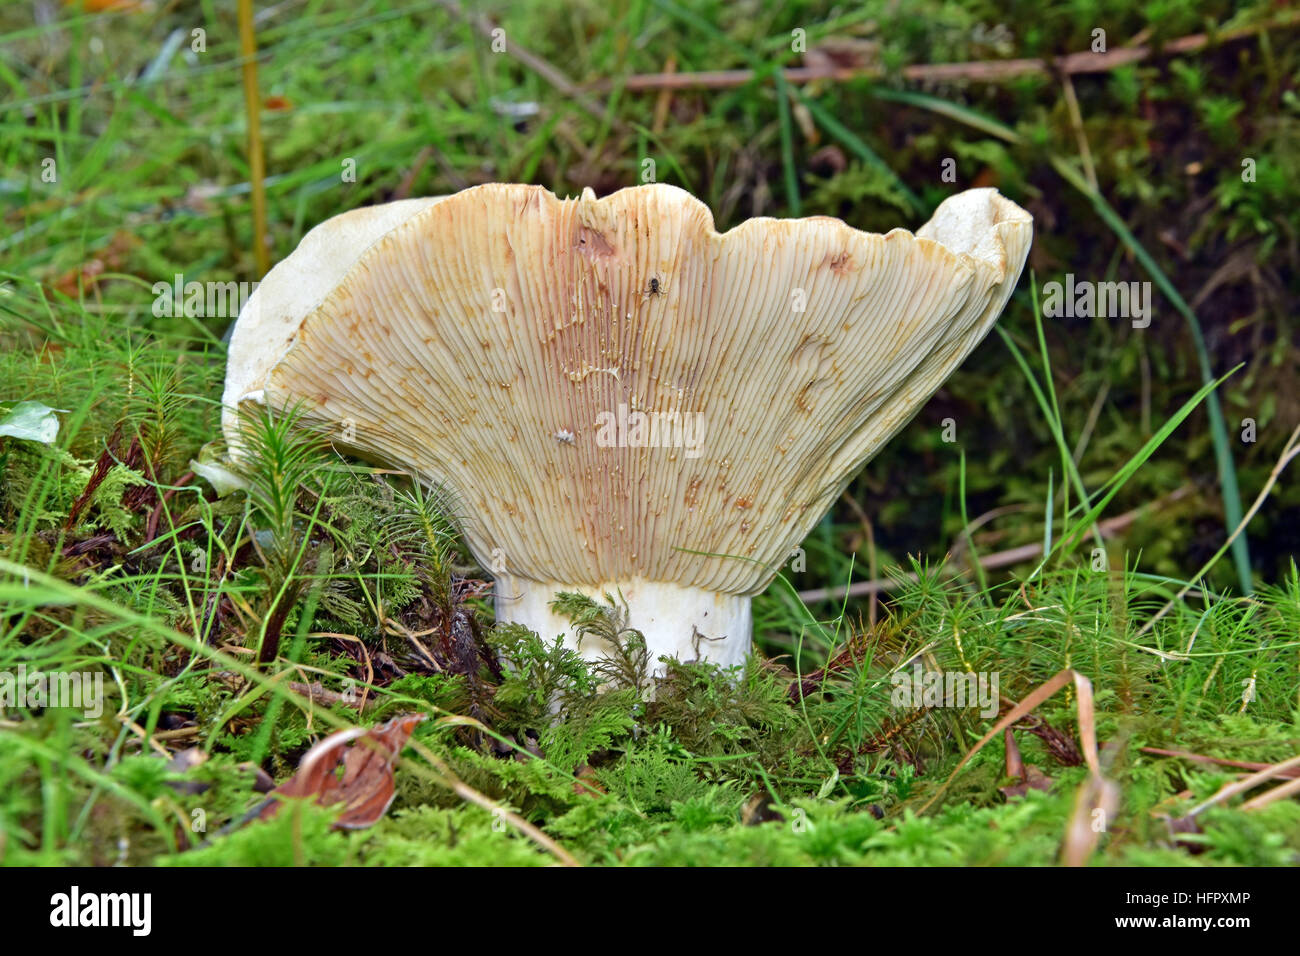 Fungo imbuto gigante per trooping, Clitocybe geotropawild Foto Stock